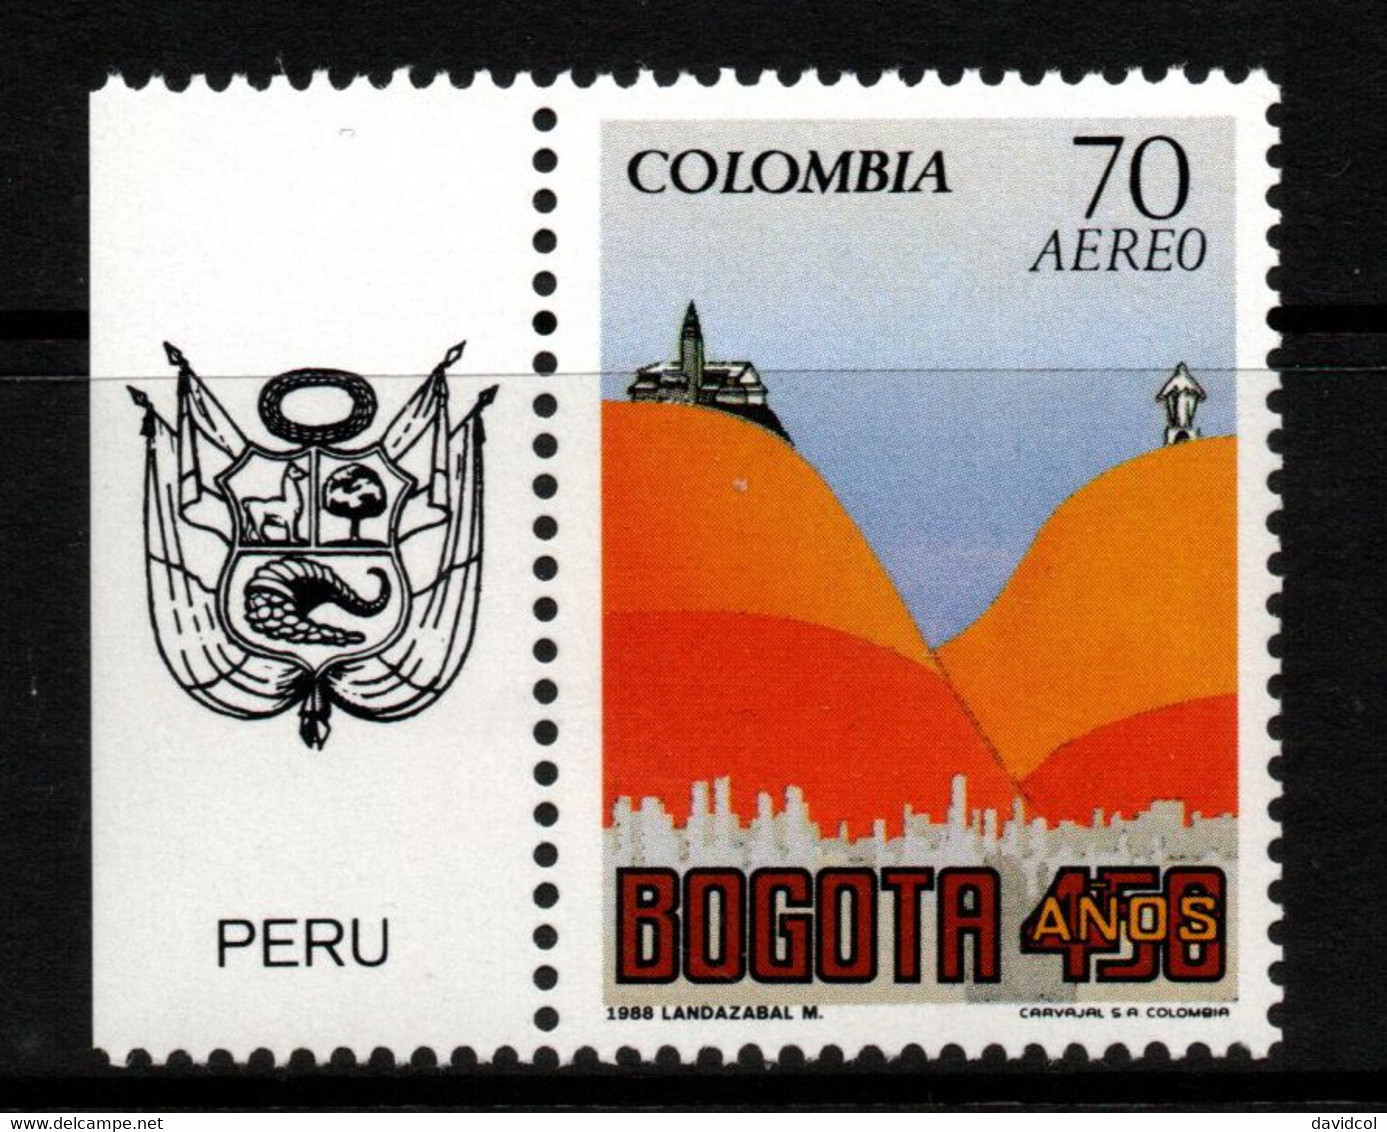 02G- KOLUMBIEN - 1988 - MI#:1717 - MNH- BOGOTA 450 YEARS – PERU COAT OF ARMS LABEL - Colombia